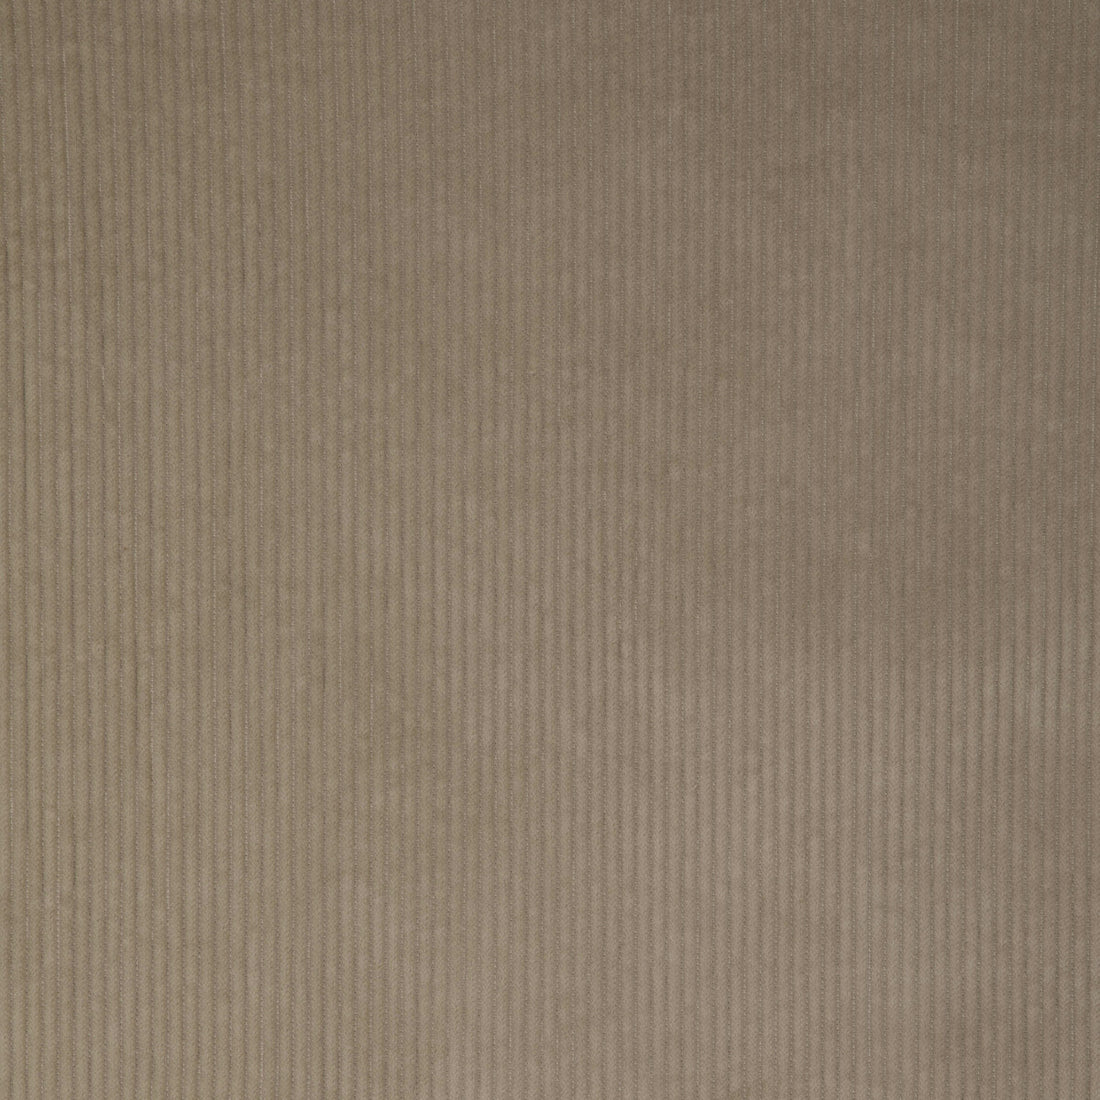 Kravet Smart fabric in 37006-106 color - pattern 37006.106.0 - by Kravet Smart